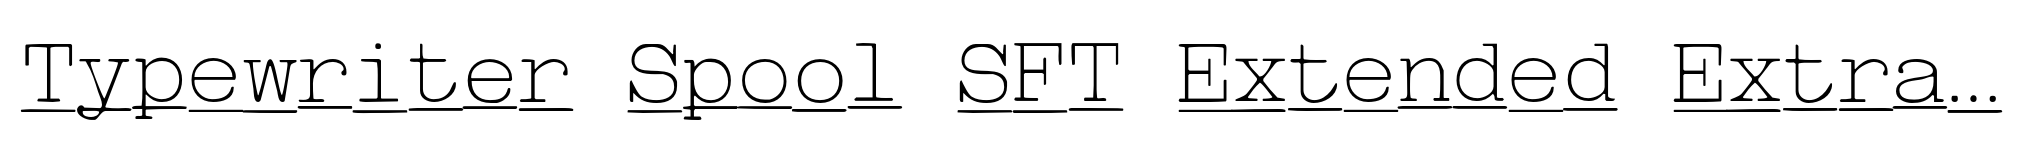 Typewriter Spool SFT Extended Extra Light Italic image